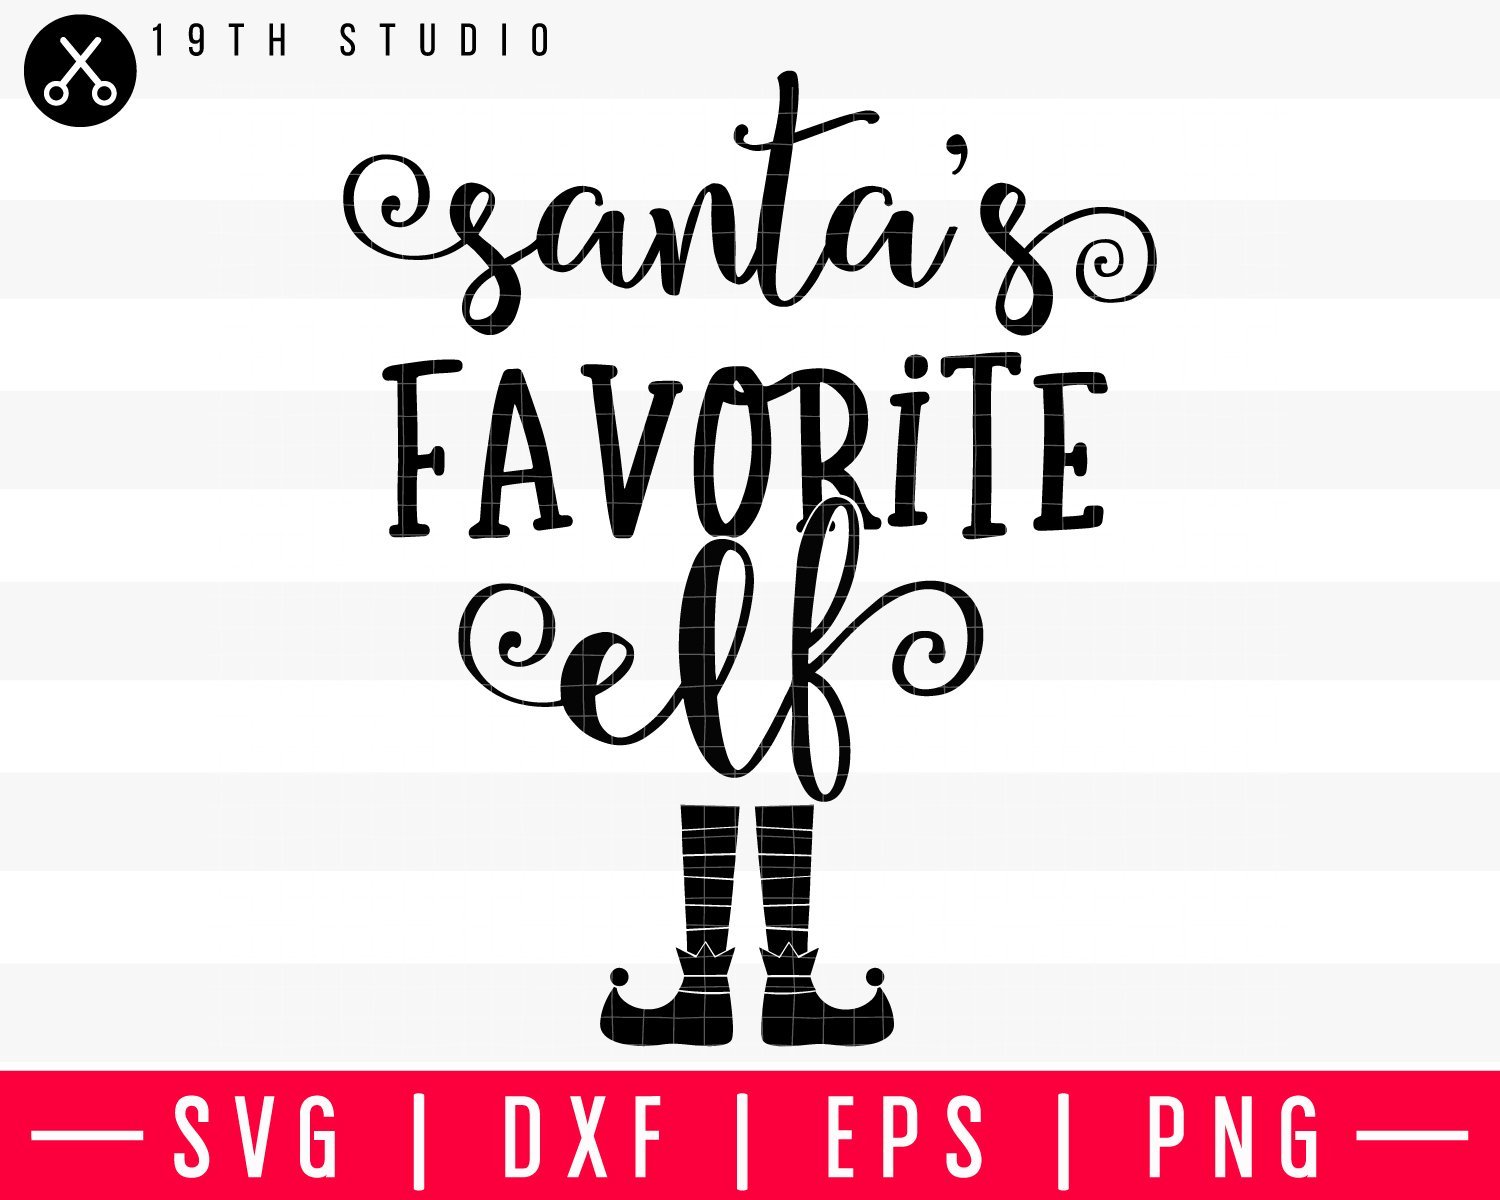 Santas favorite elf SVG | M37F11 Craft House SVG - SVG files for Cricut and Silhouette